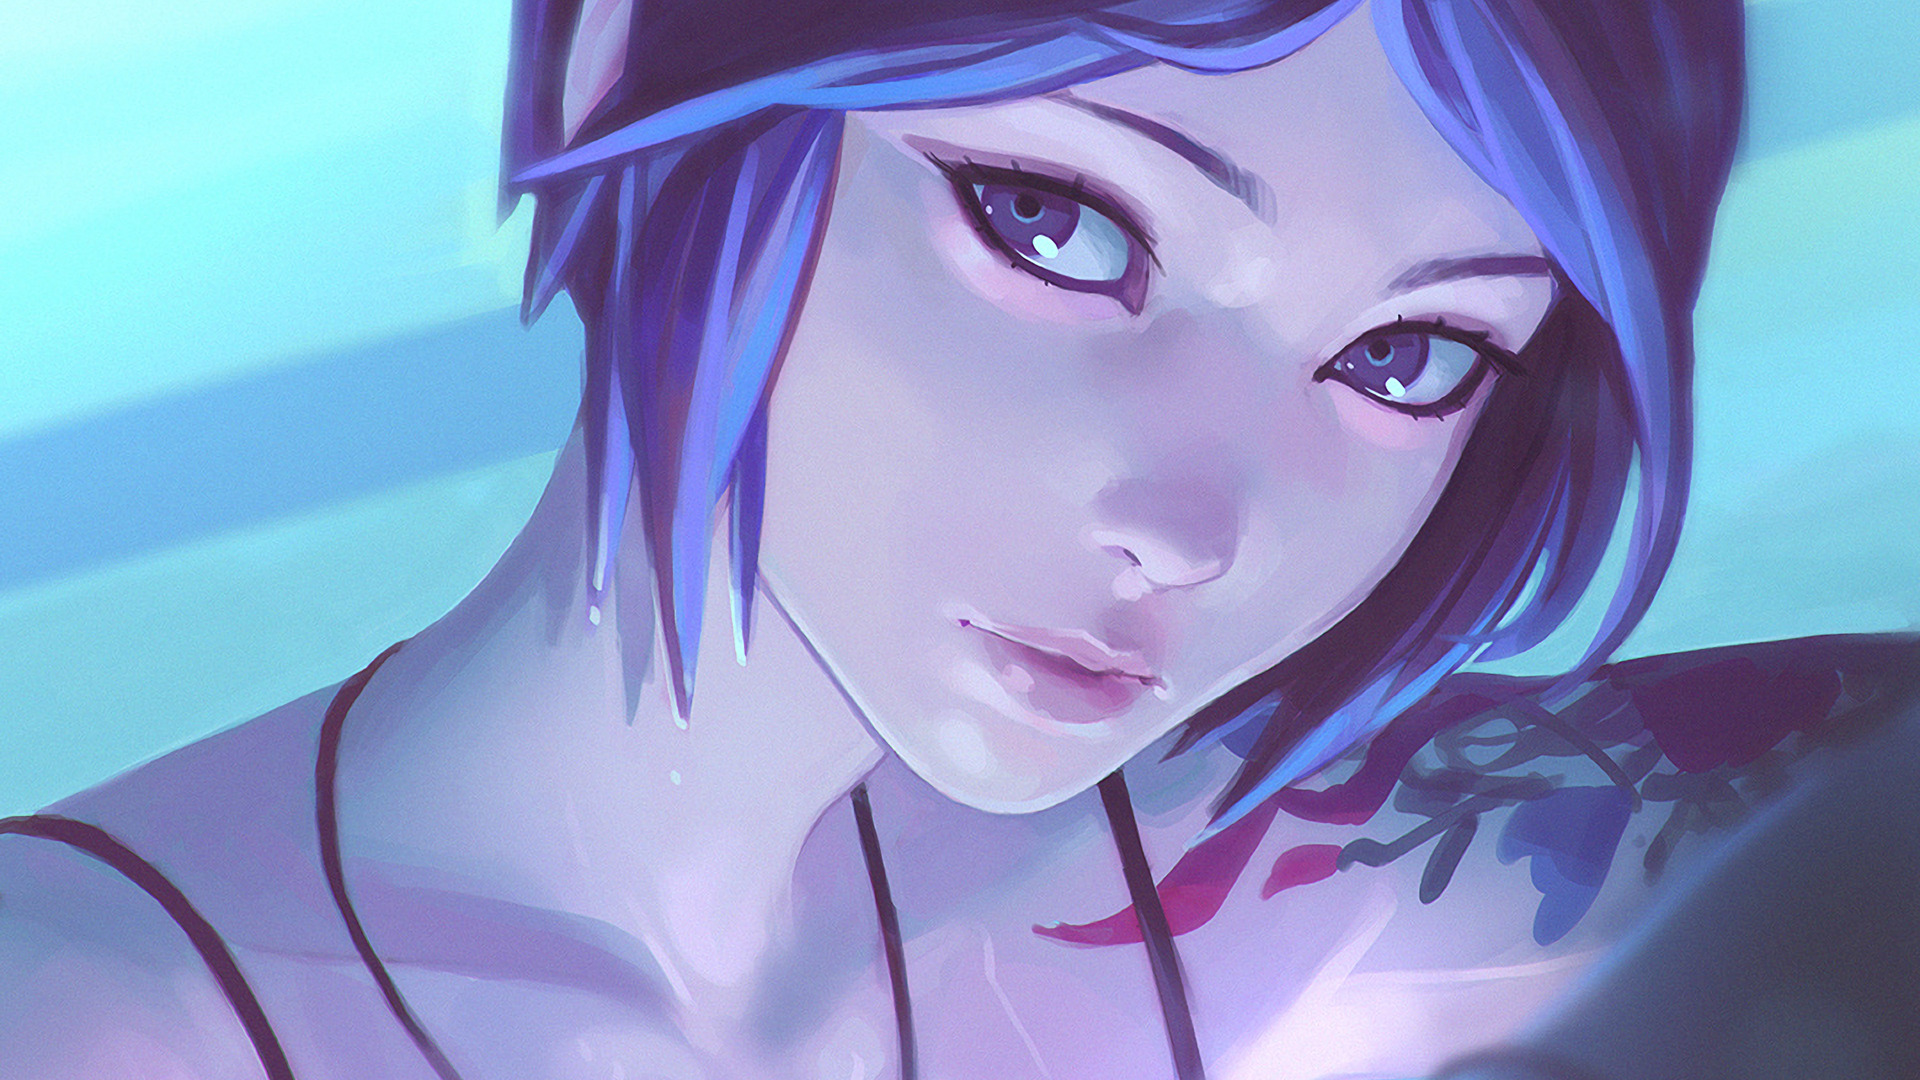 Blue-haired Anime Girl by Kuvshinov-Ilya on DeviantArt - wide 10